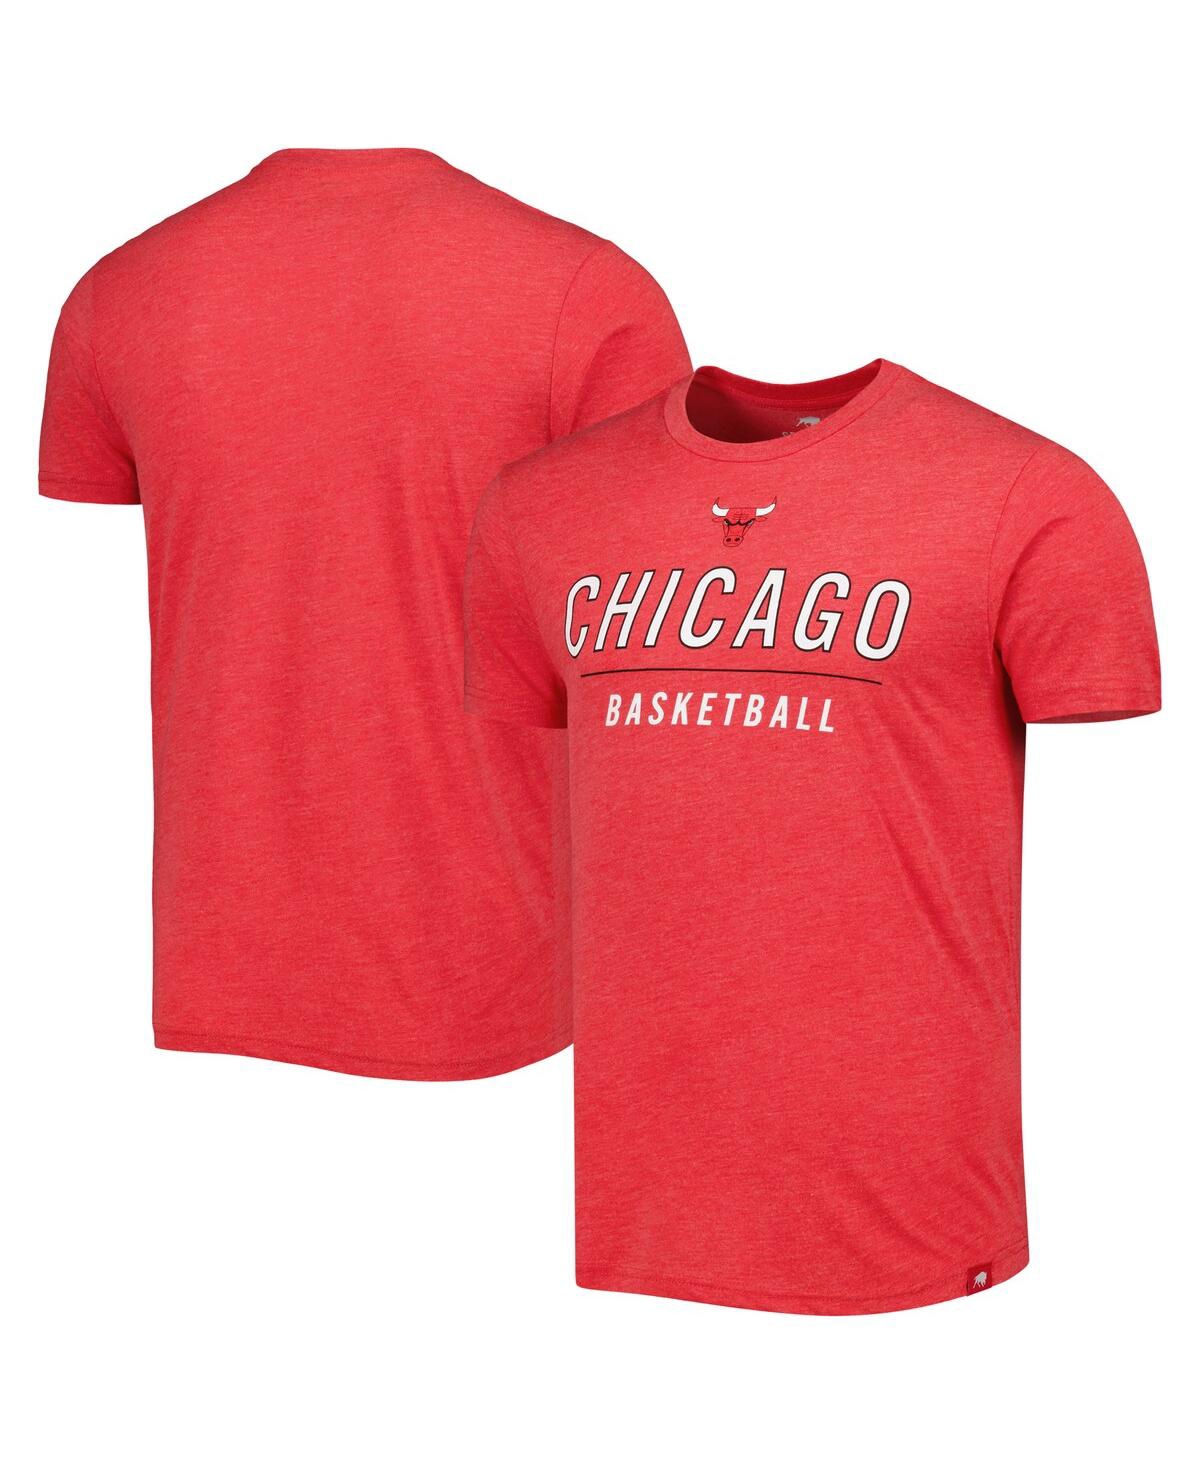 Men's and Women's Sportiqe Red Chicago Bulls Turbo Tri-Blend T-shirt - Red